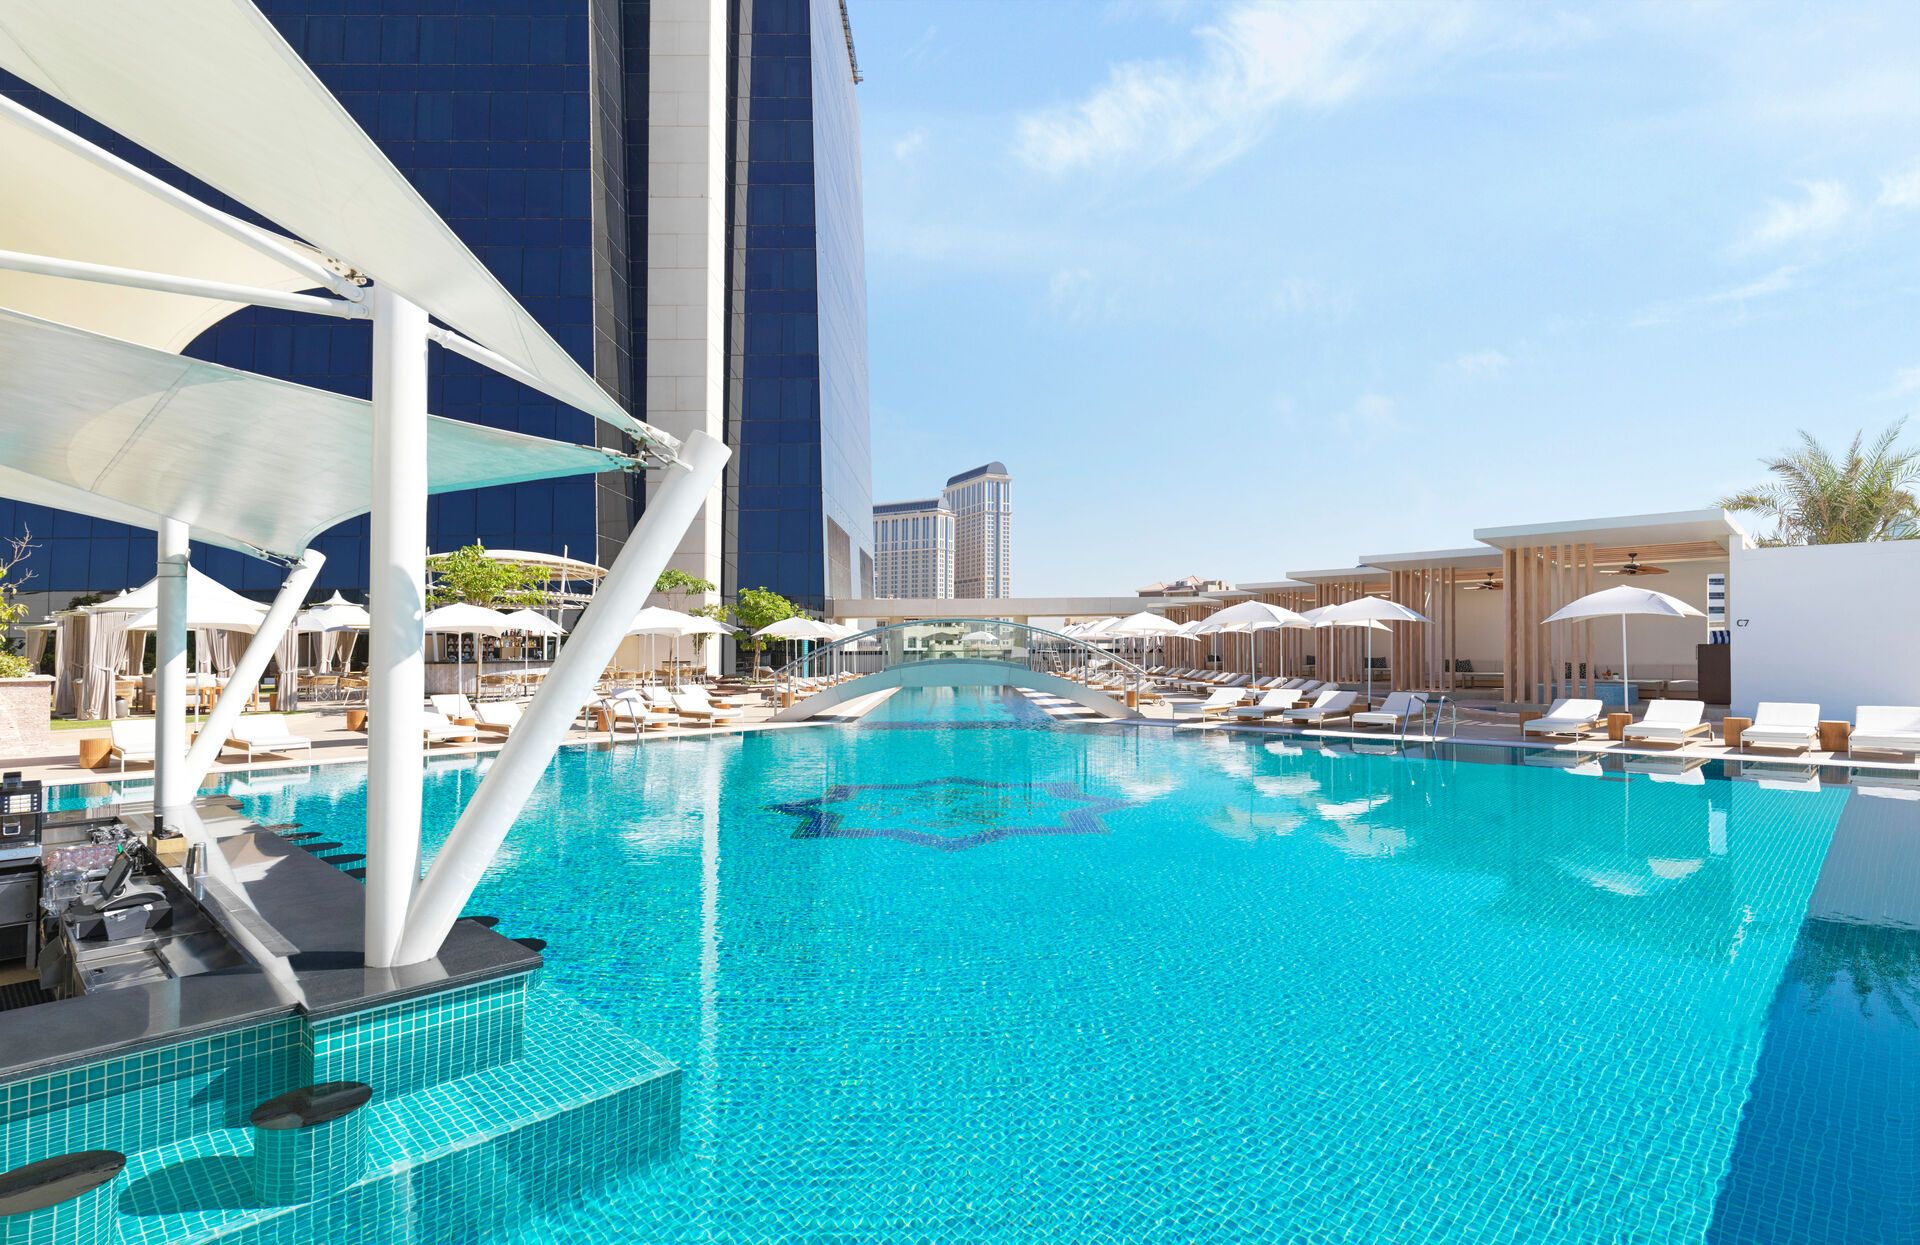 Emirats Arabes Unis - Dubaï - Hotel Sofitel Dubai The Obelisk 5*